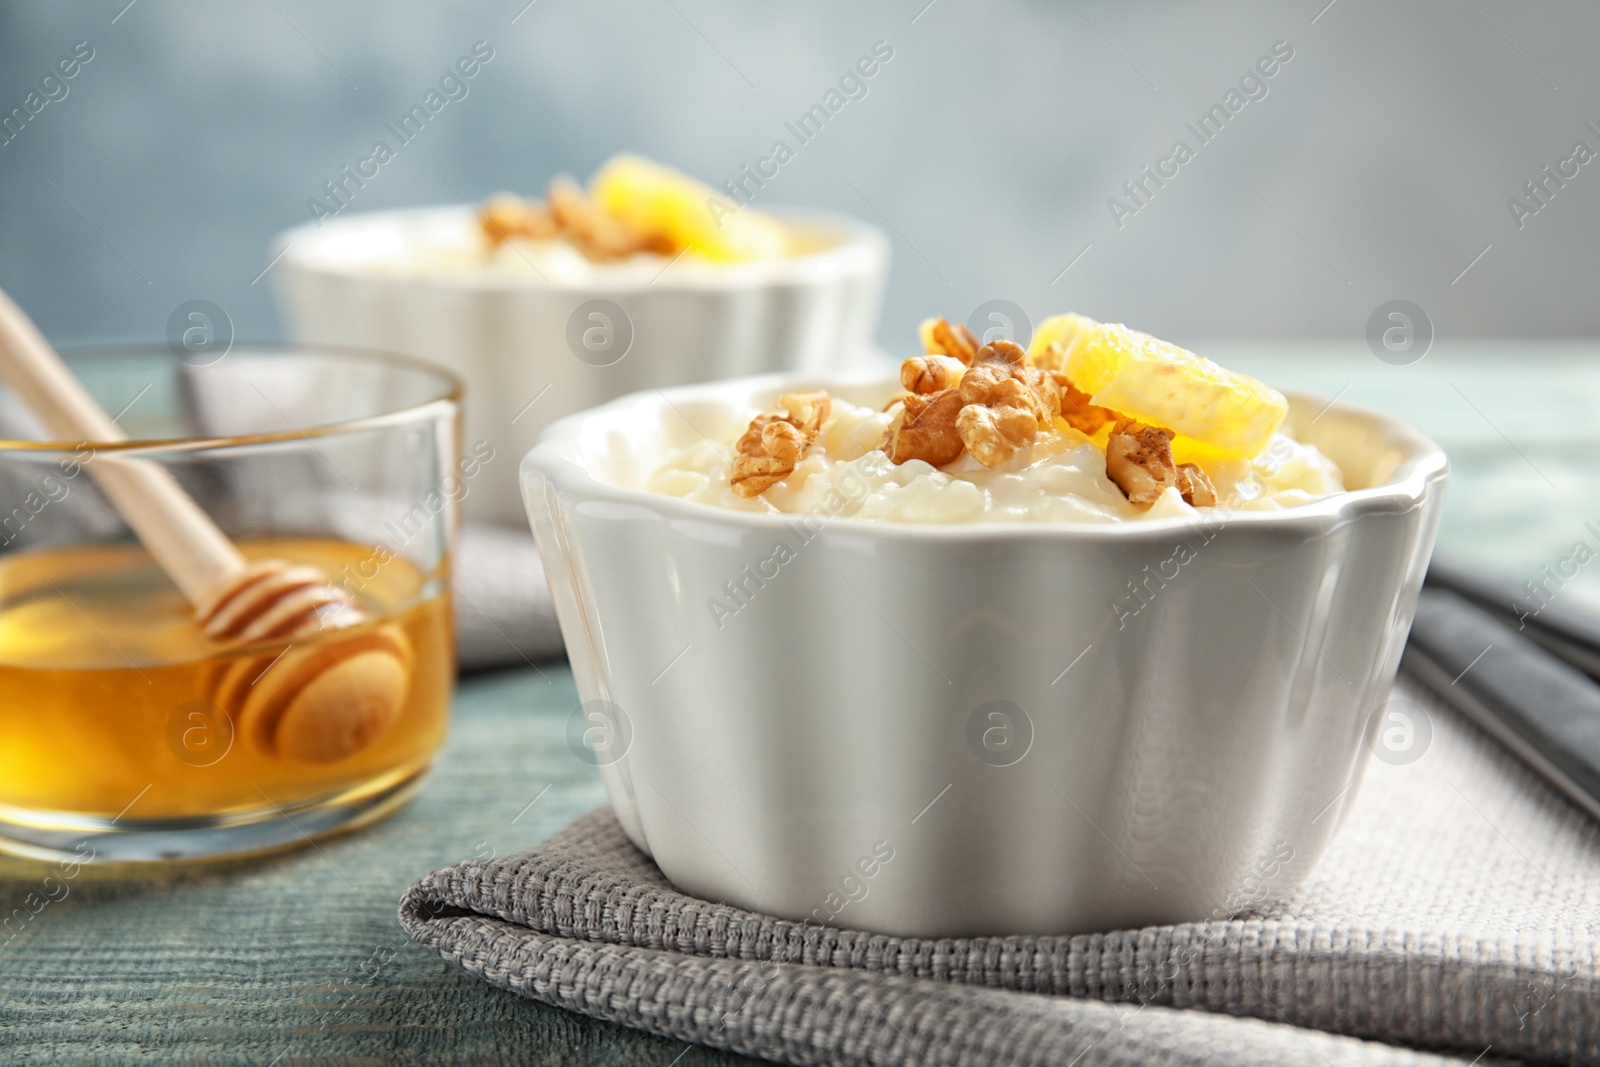 Photo of Creamy rice pudding with walnuts and orange slice in ramekin on table